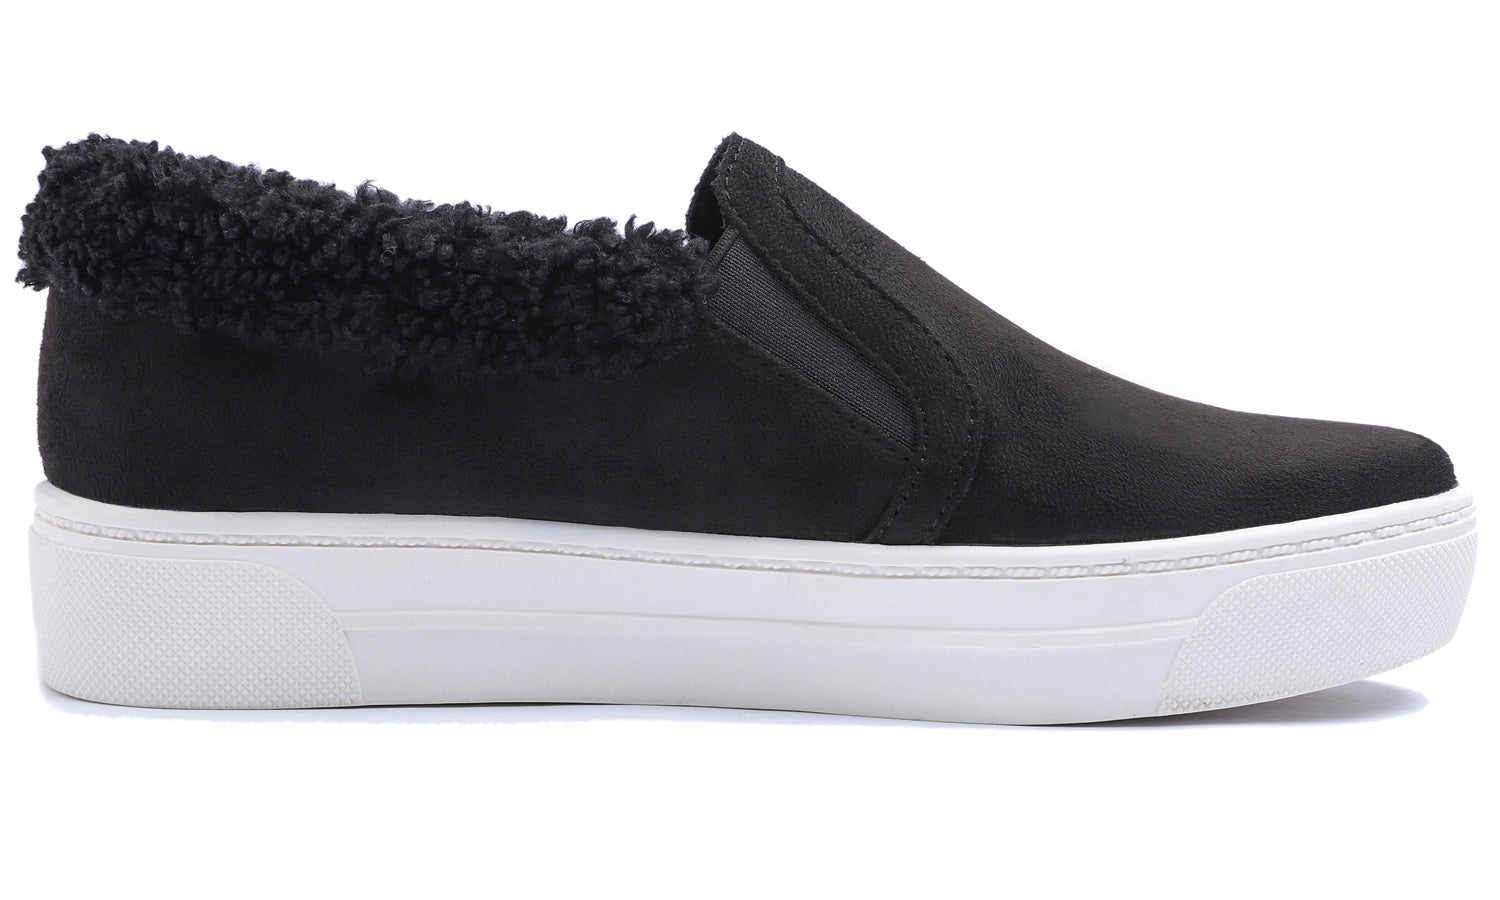 Feversole Women's Casual Slip On Sneaker Comfort Cozy Winter Warm Loafer Low Top Boot Faux Black Suede Sheerling